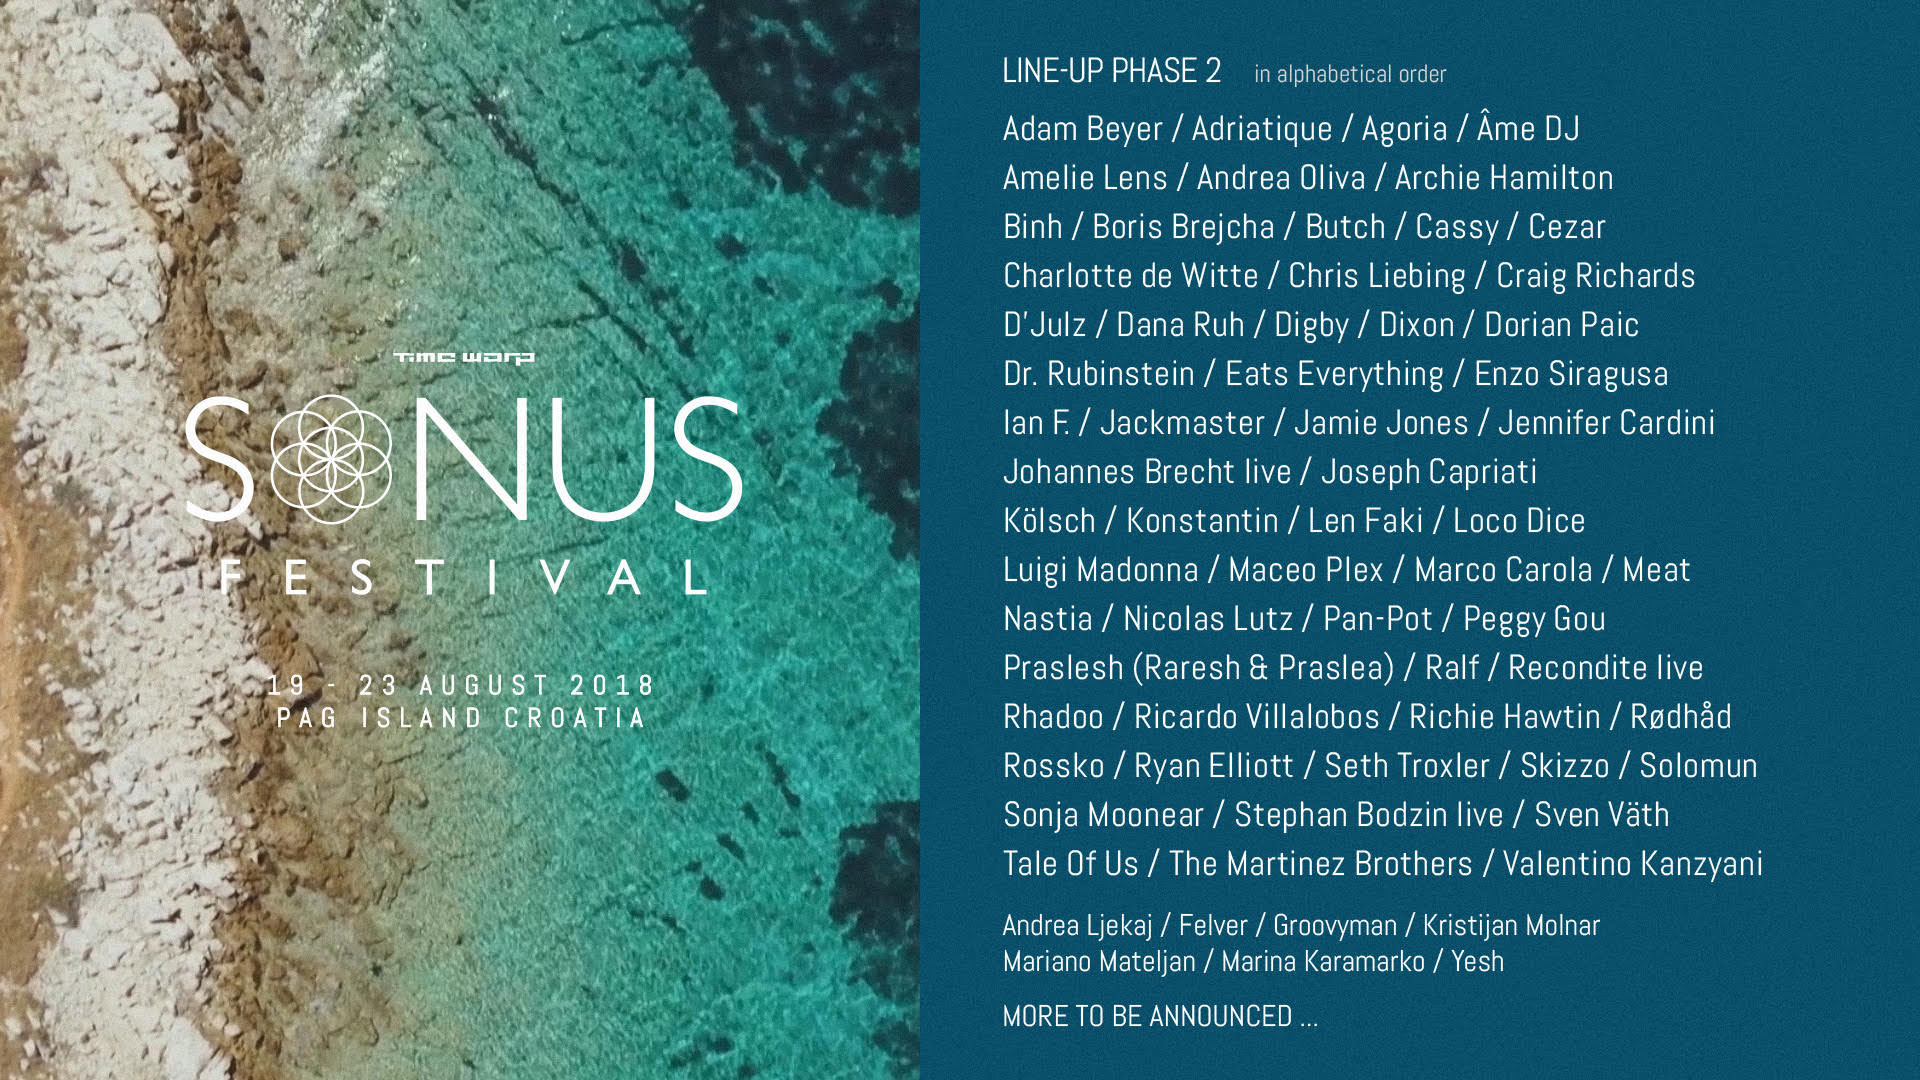 Lineup / Running Order Sonus Festival August 2018, Zadar (Croatia)